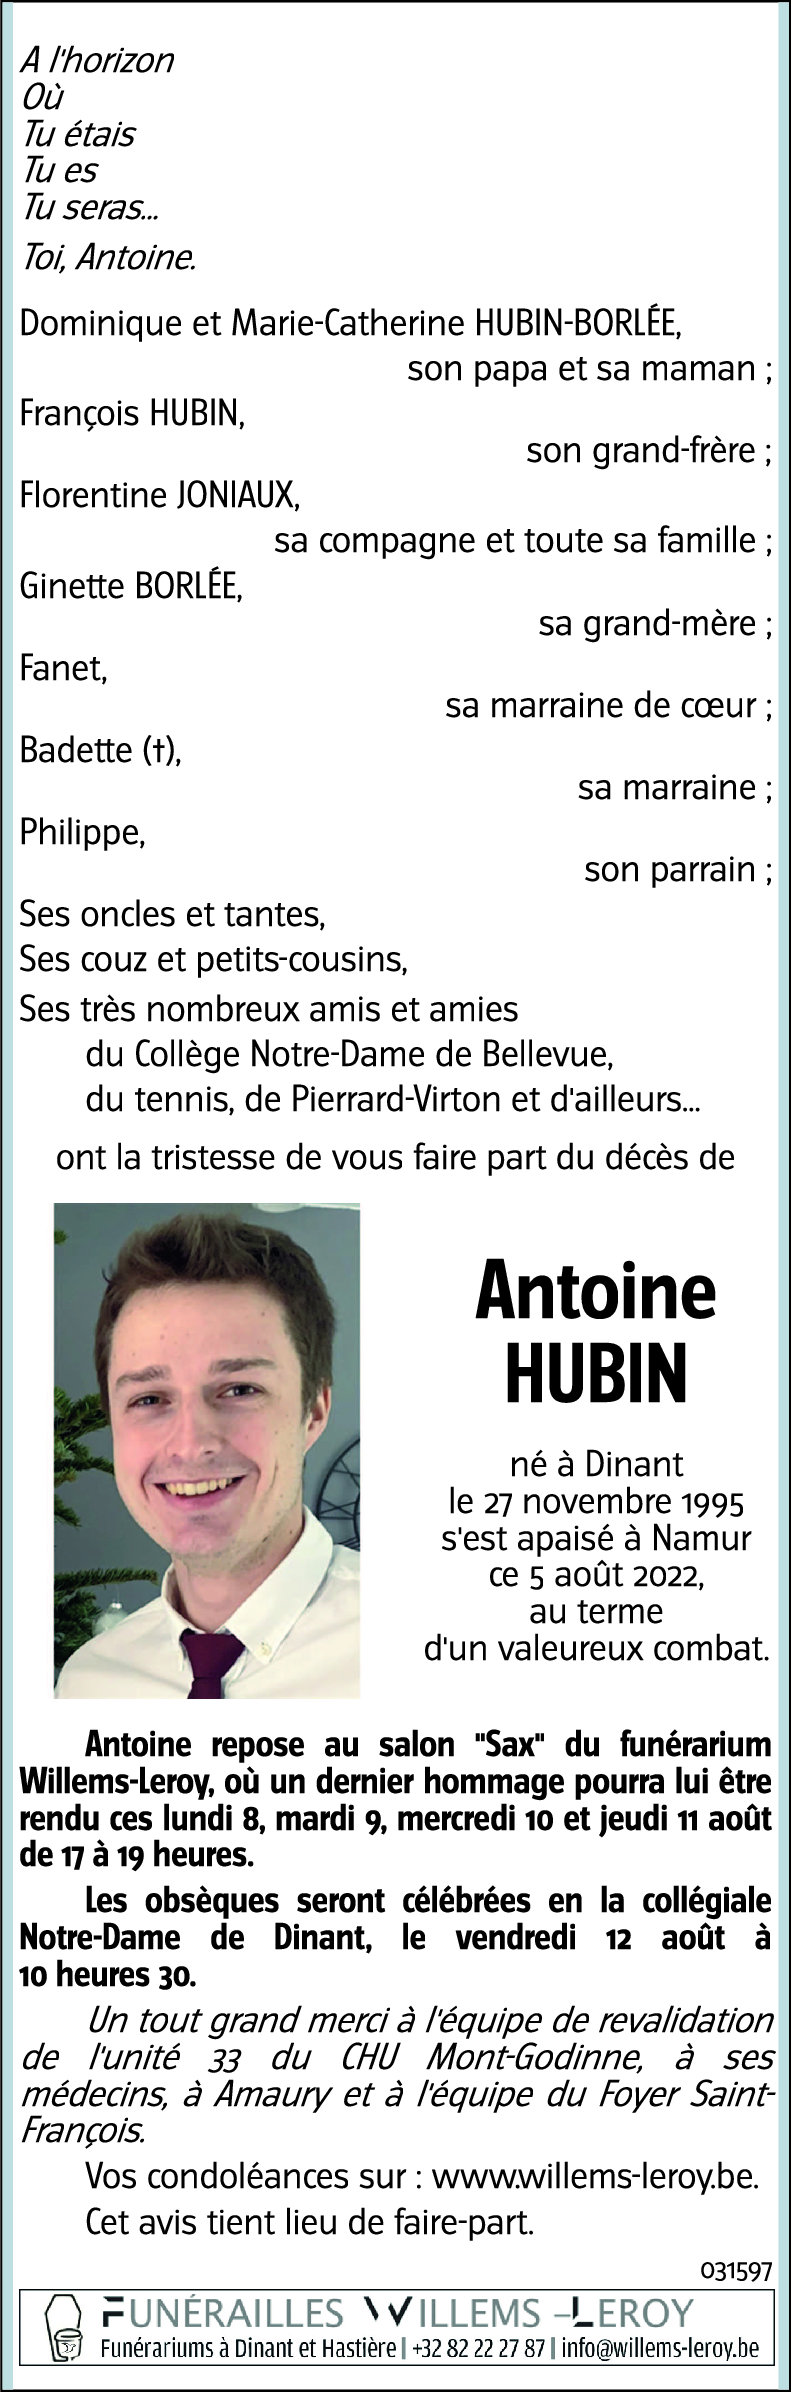 Antoine HUBIN